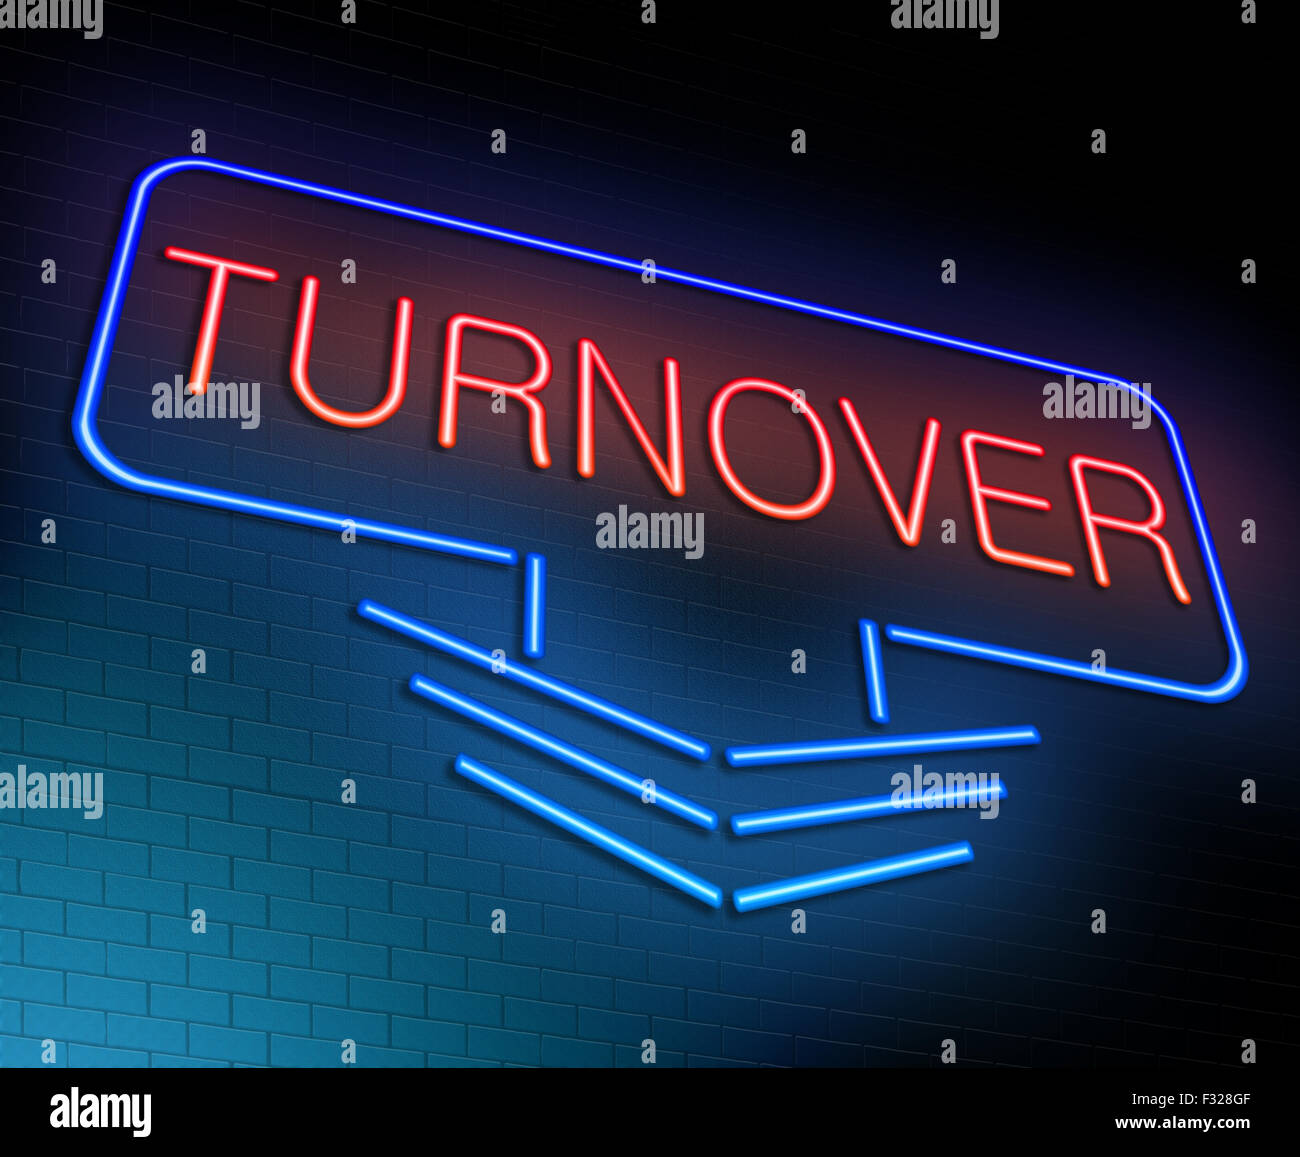 Turnover concept. Stock Photo